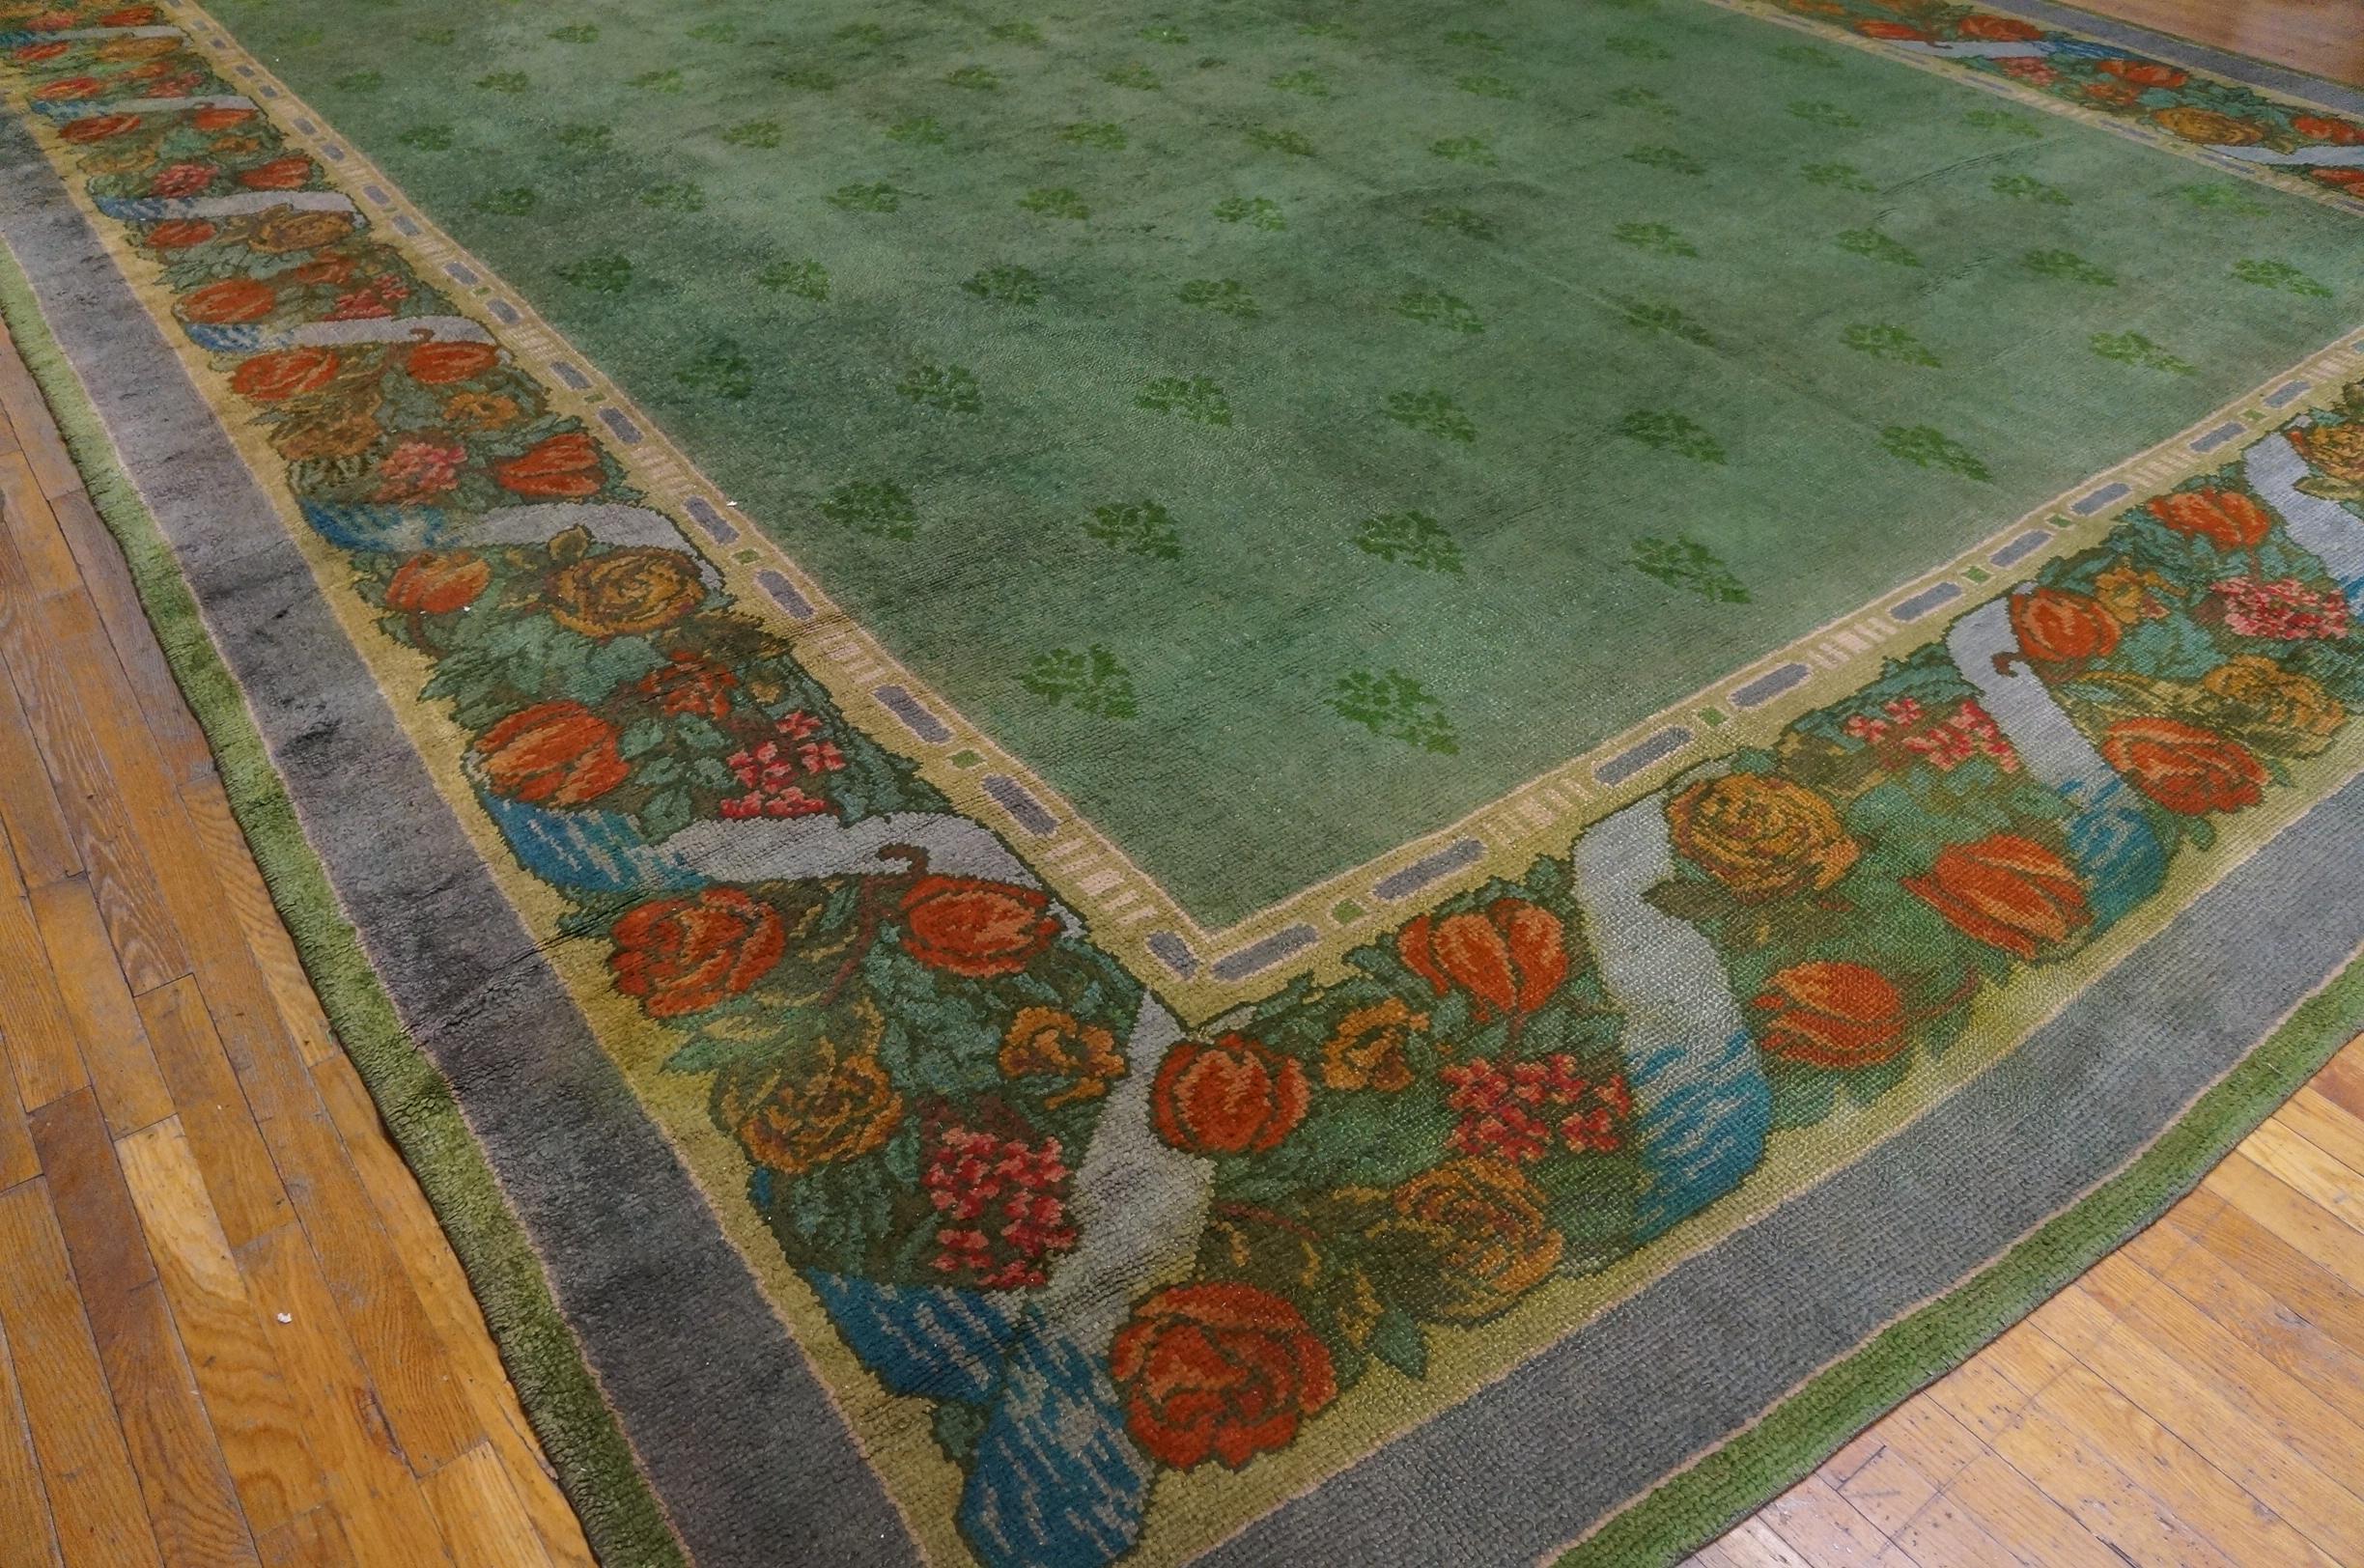 Early 20th Century Irish Donegal Arts & Crafts Carpet (13'3